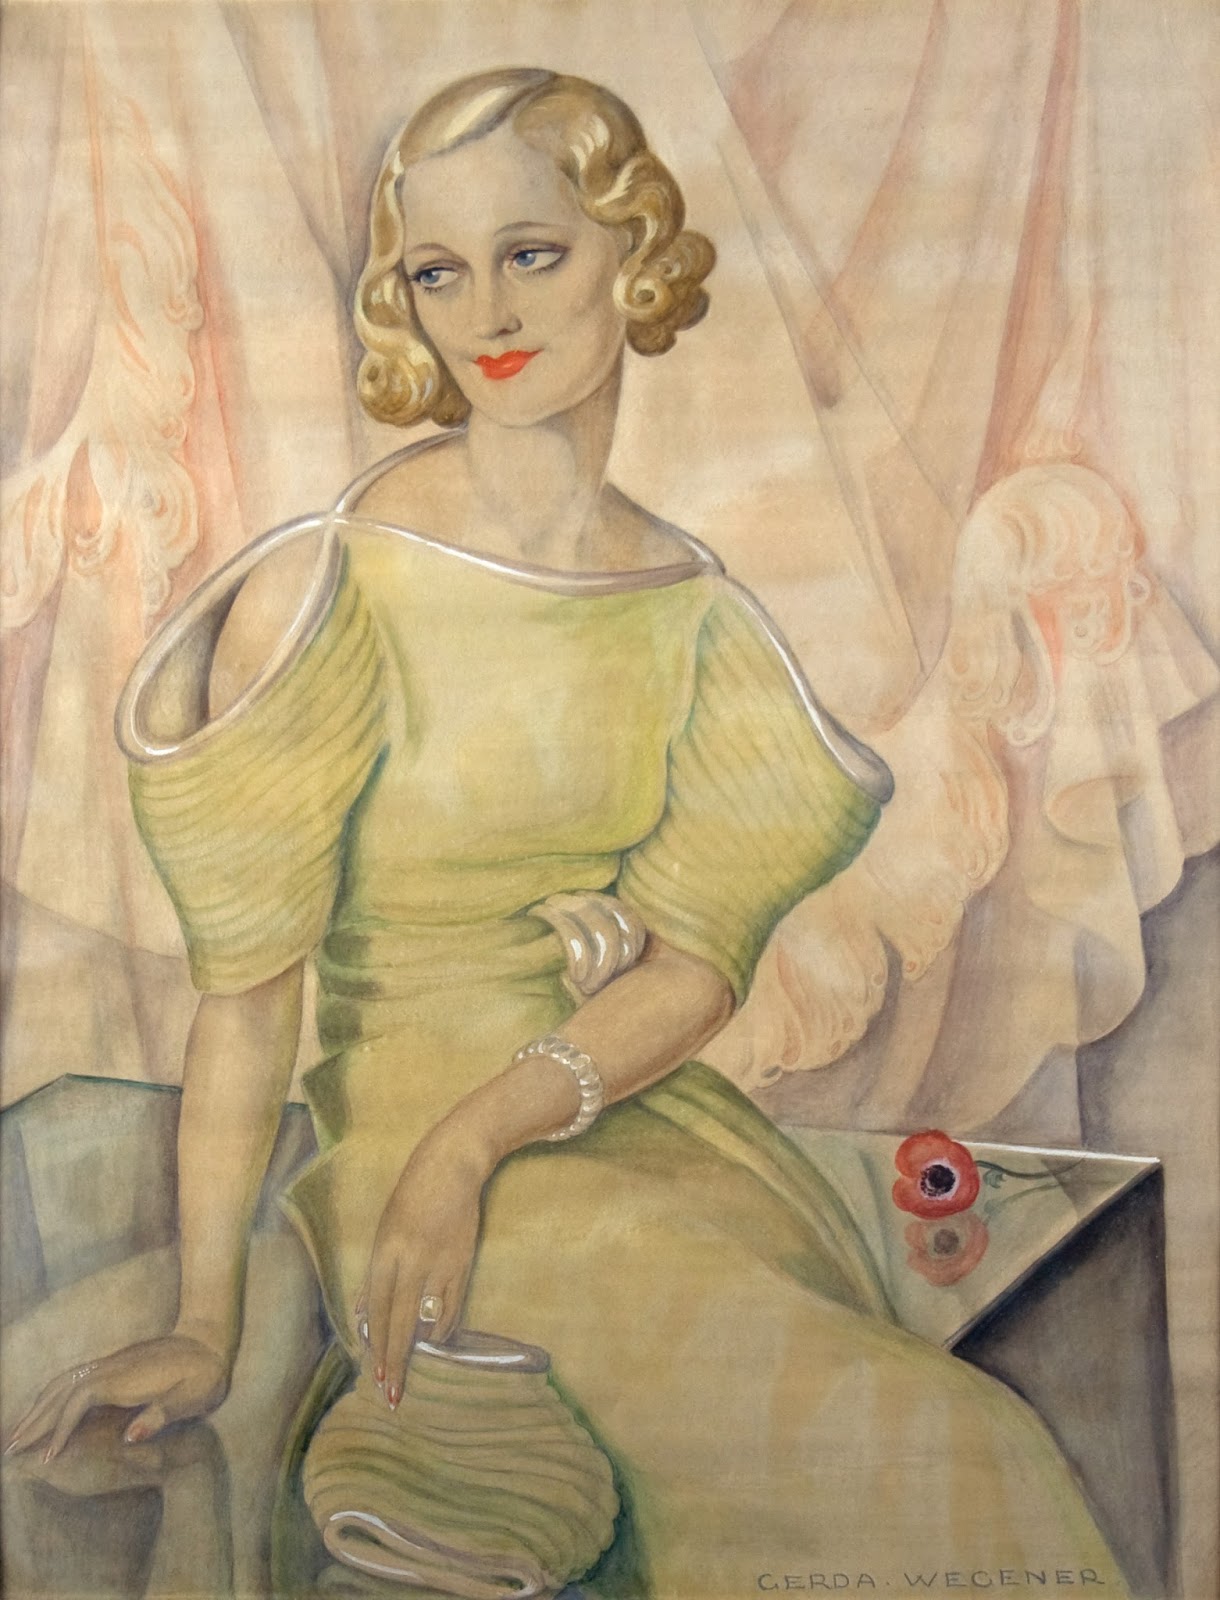 Gerda Wegener: 'The Lady Gaga of the 1920s', Women